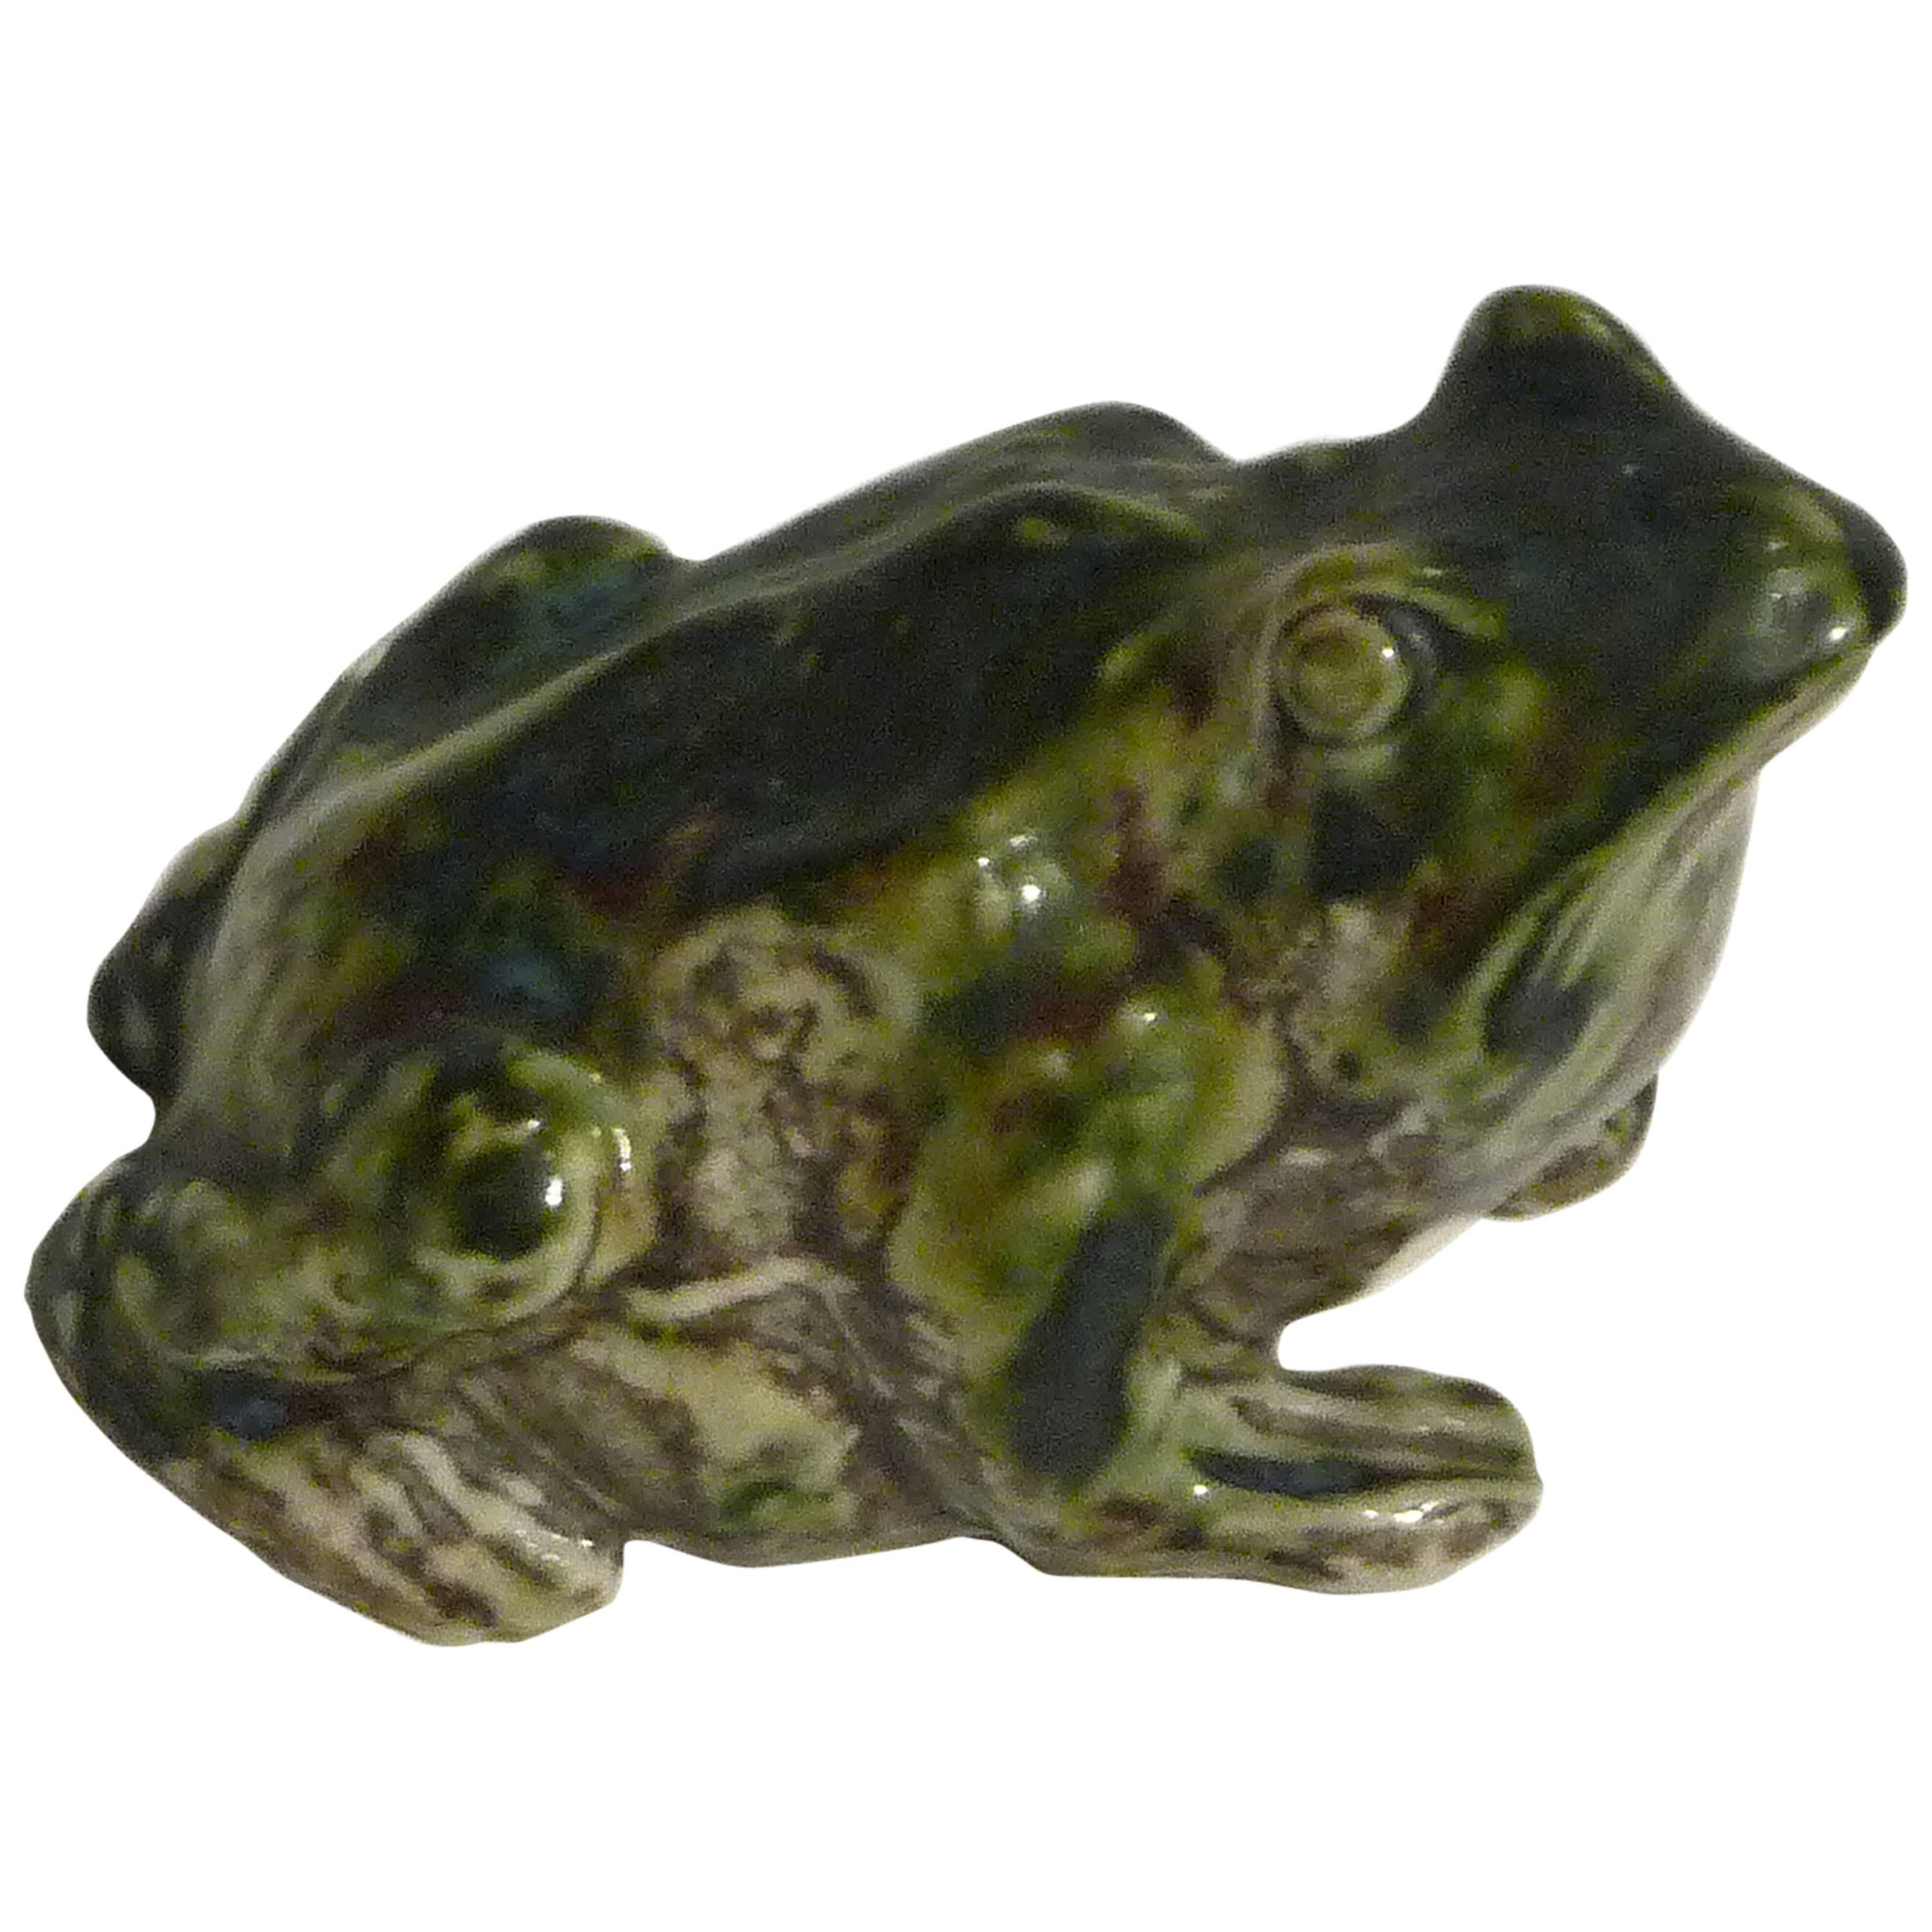 Pierre-Adrien Dalpayrat, Sculpture Representing a Frog, Signed